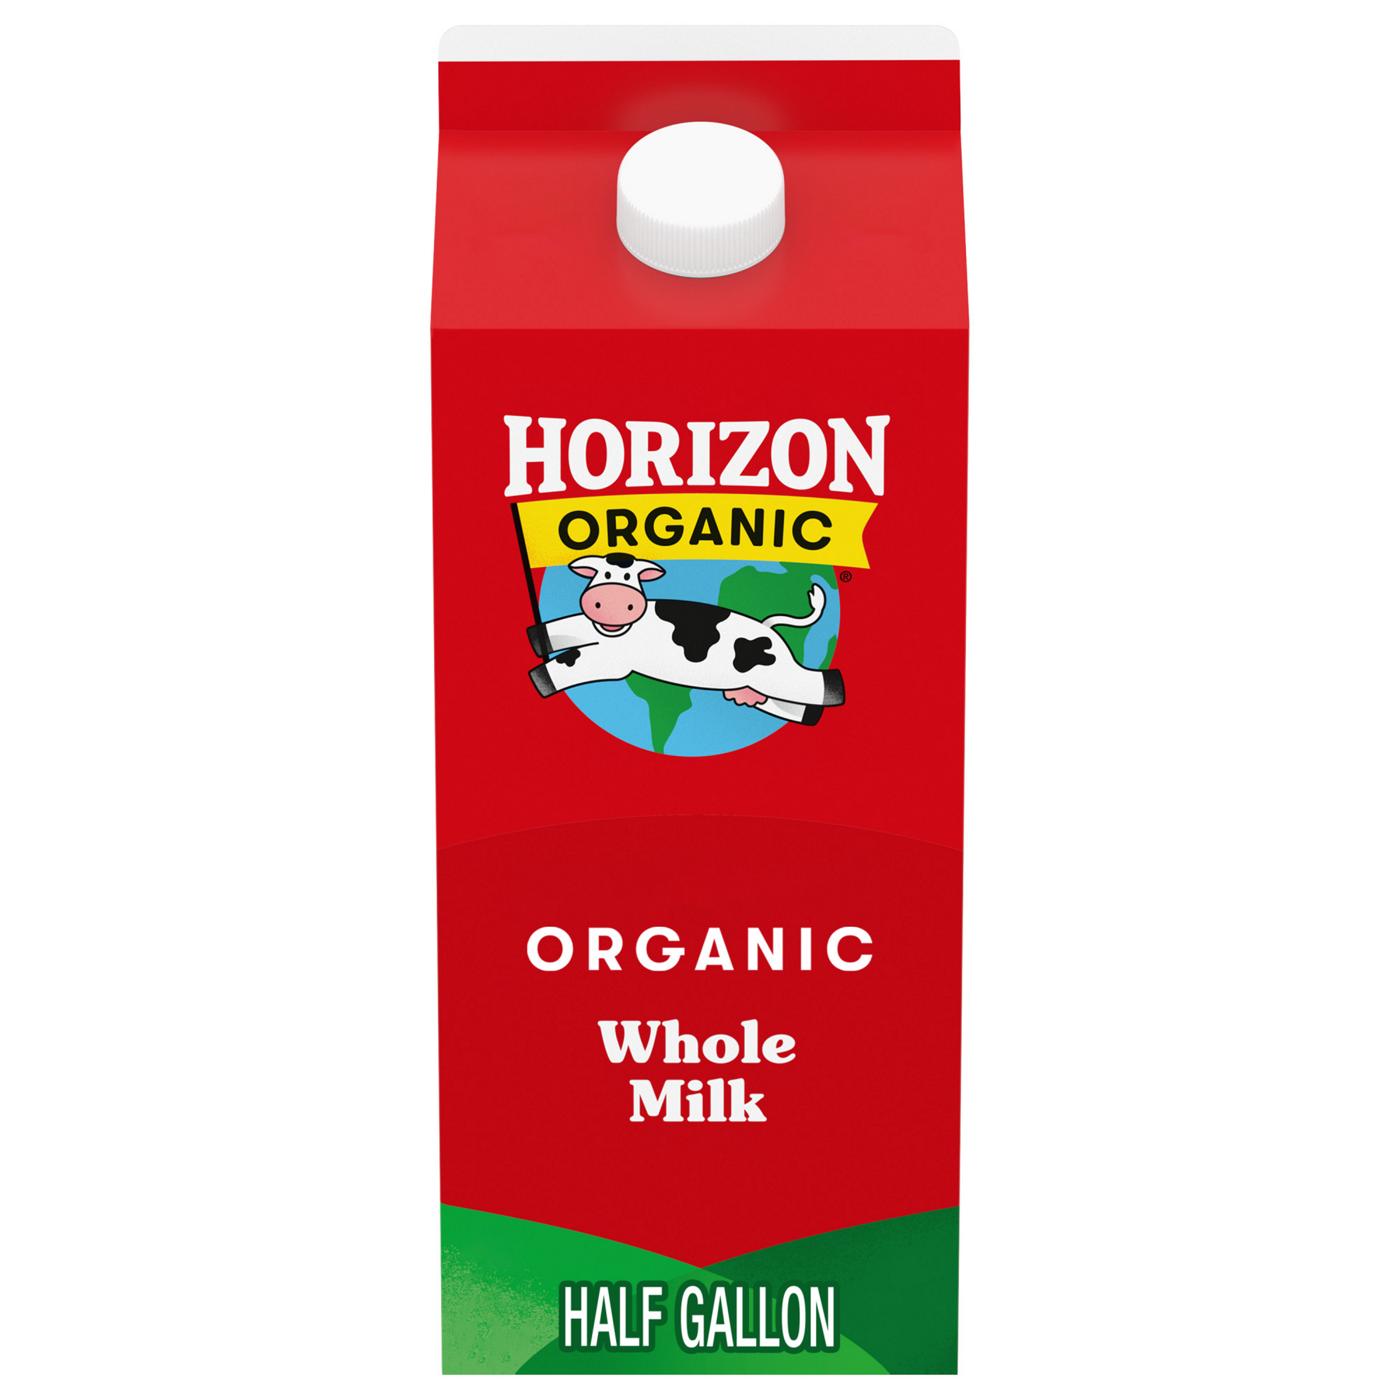 Horizon Organic Whole Milk; image 1 of 6